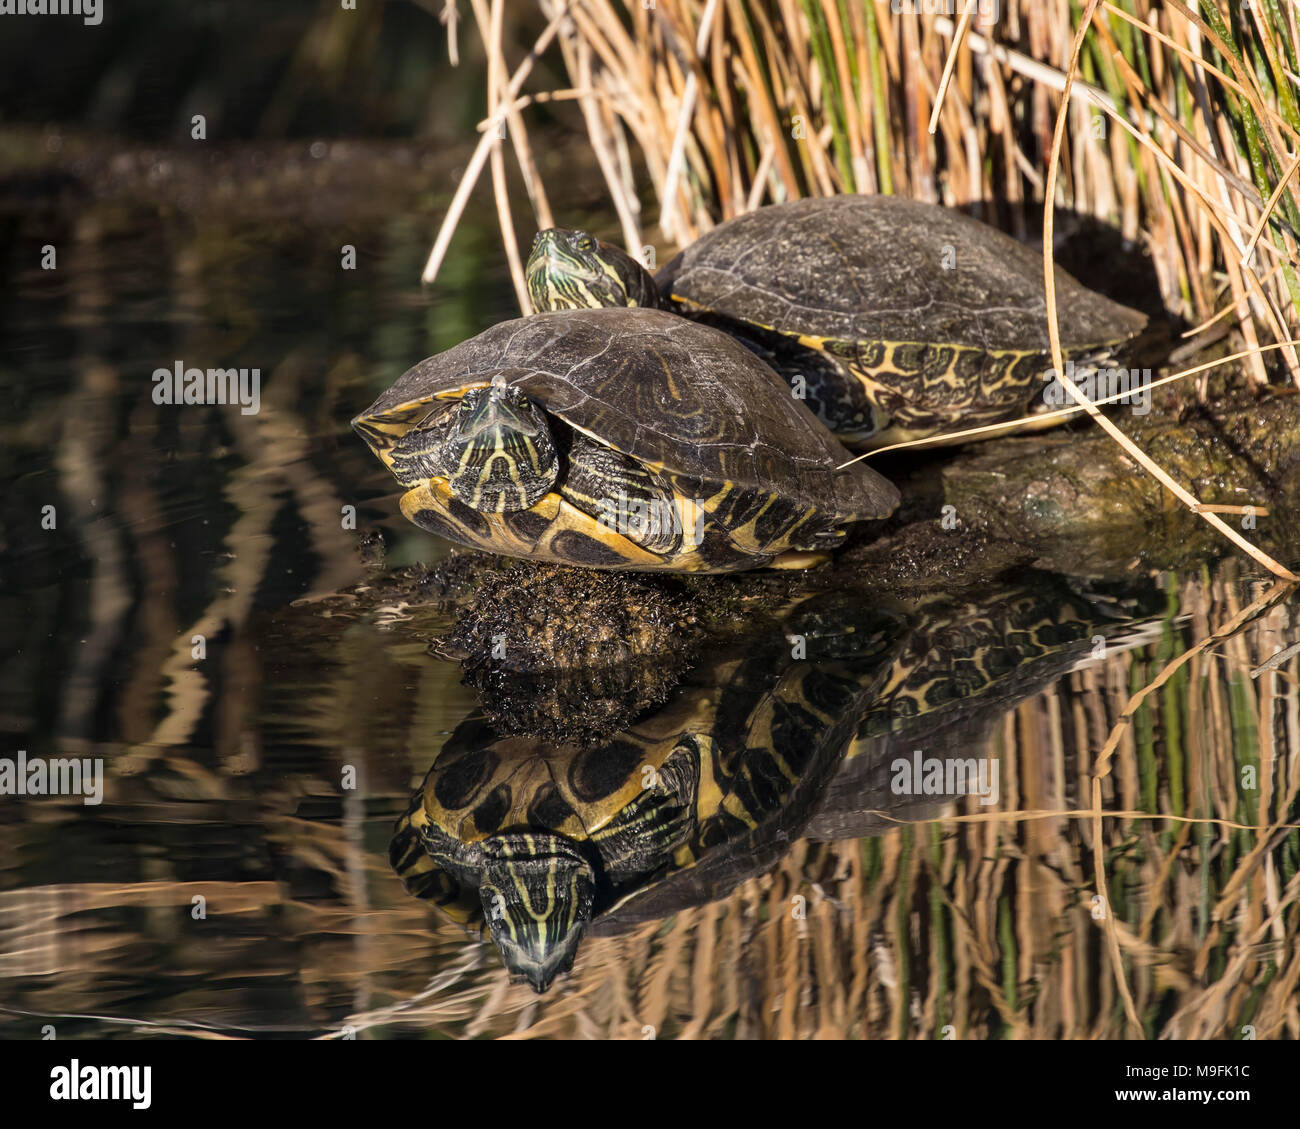 Turtles basking in the sun Stock Photo